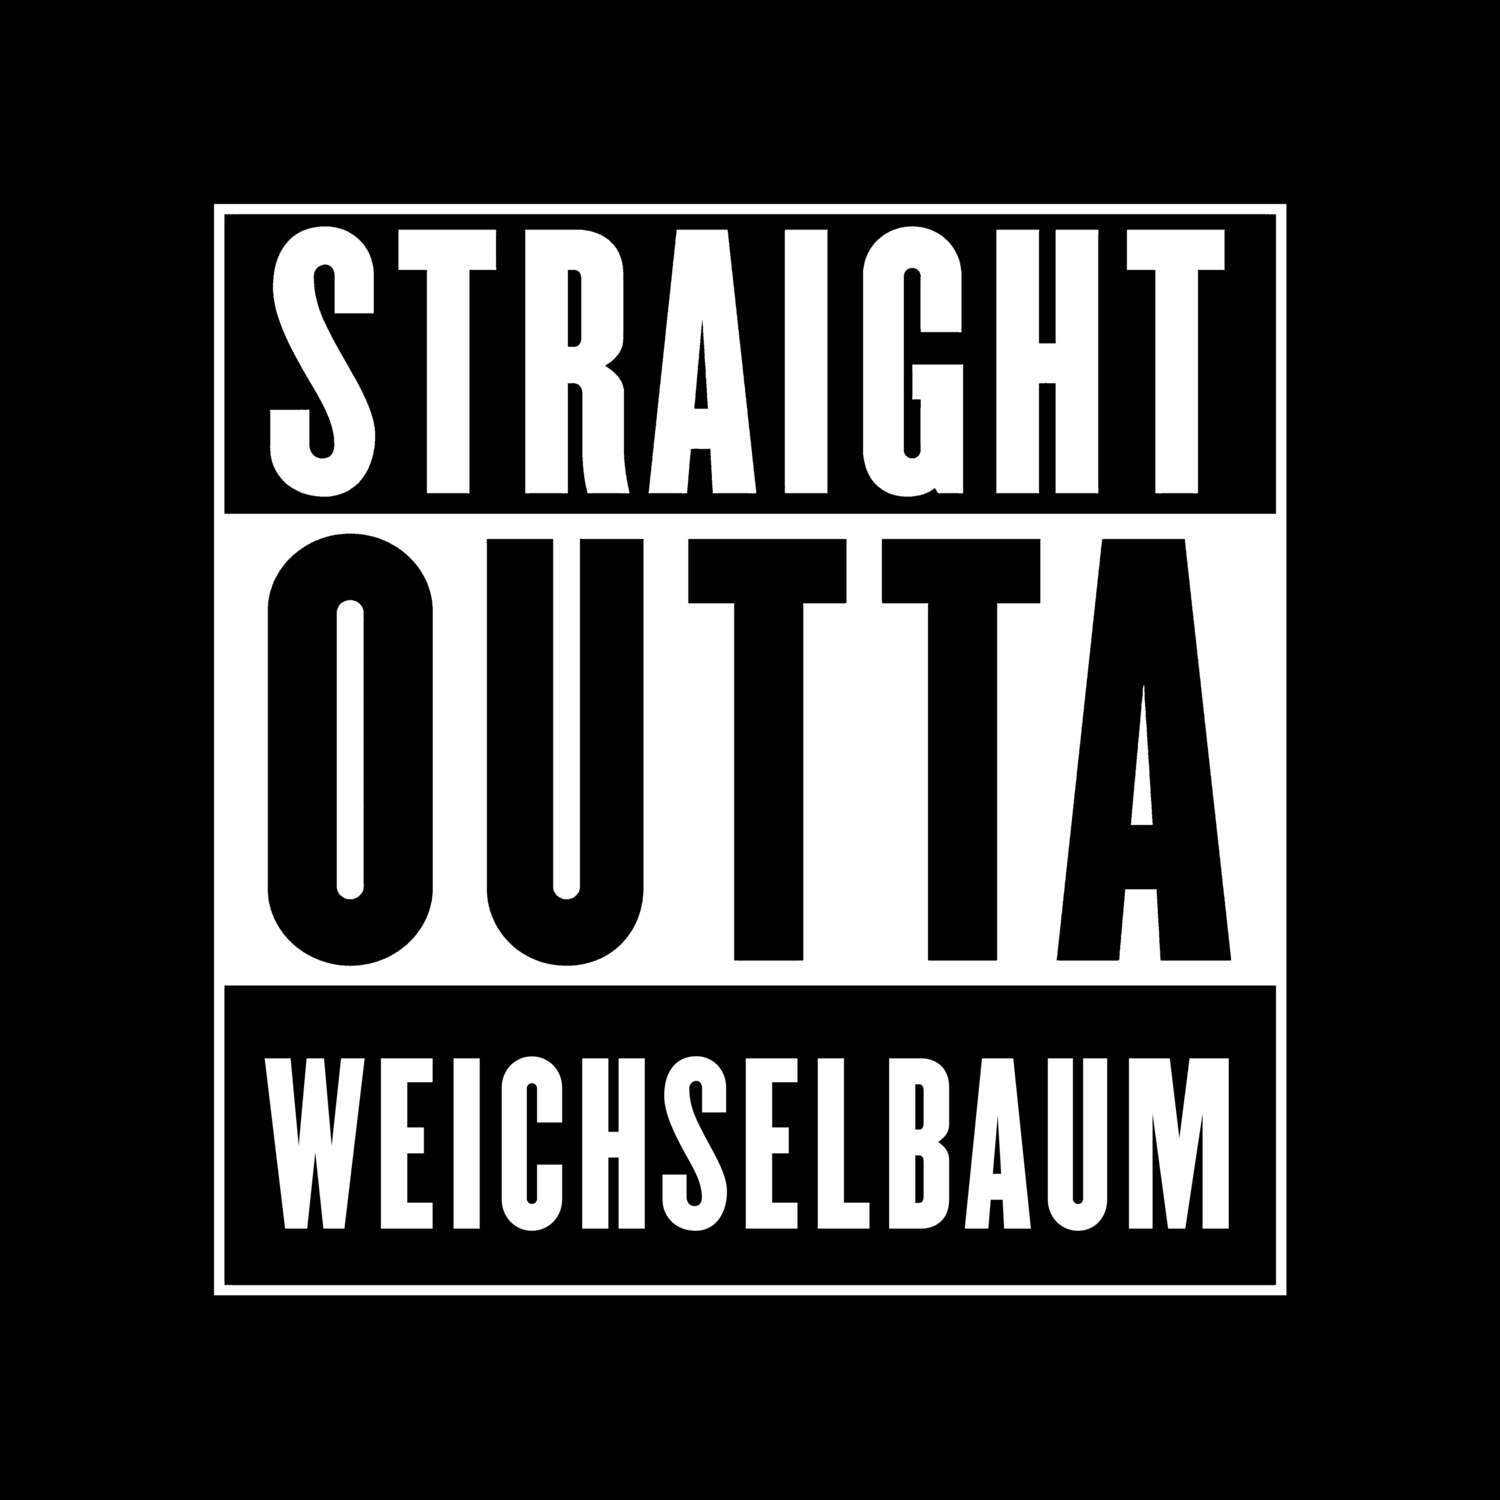 Weichselbaum T-Shirt »Straight Outta«